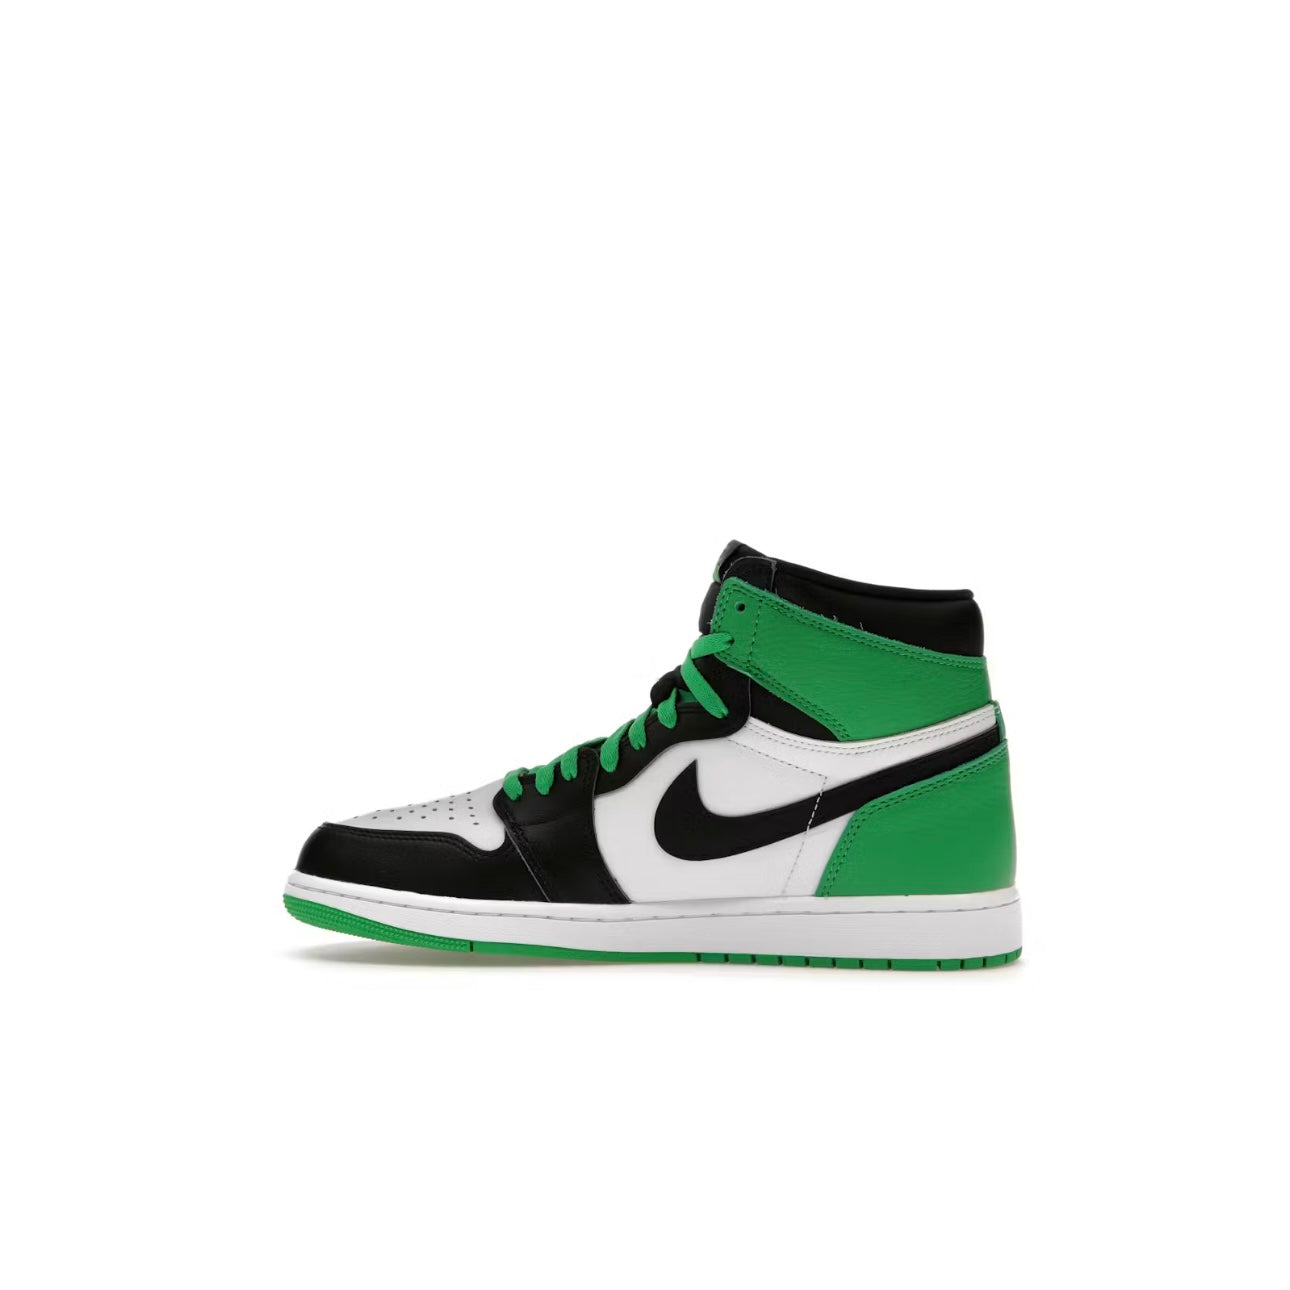 Air Jordan lucky green - PENGUIN SHOES Penguin shoes